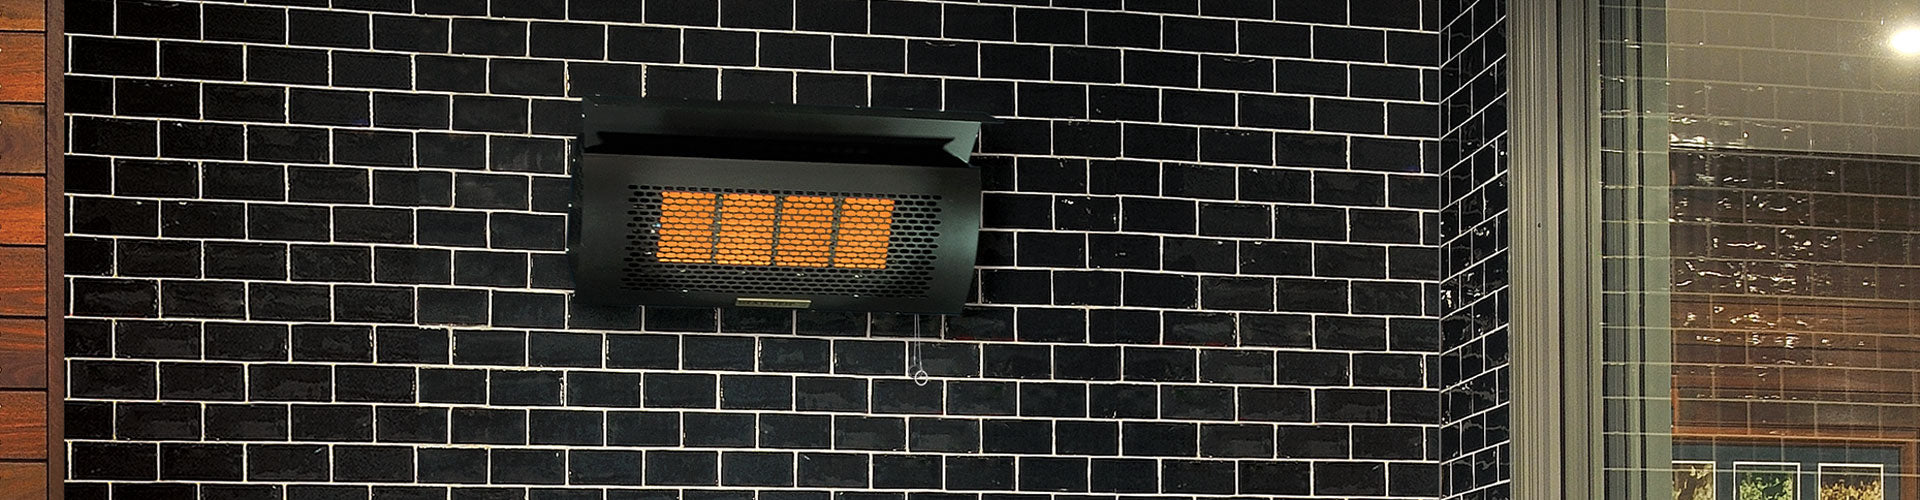 Heatstrip Heat Strip Wall mounted Outside Heater - Natural Gas